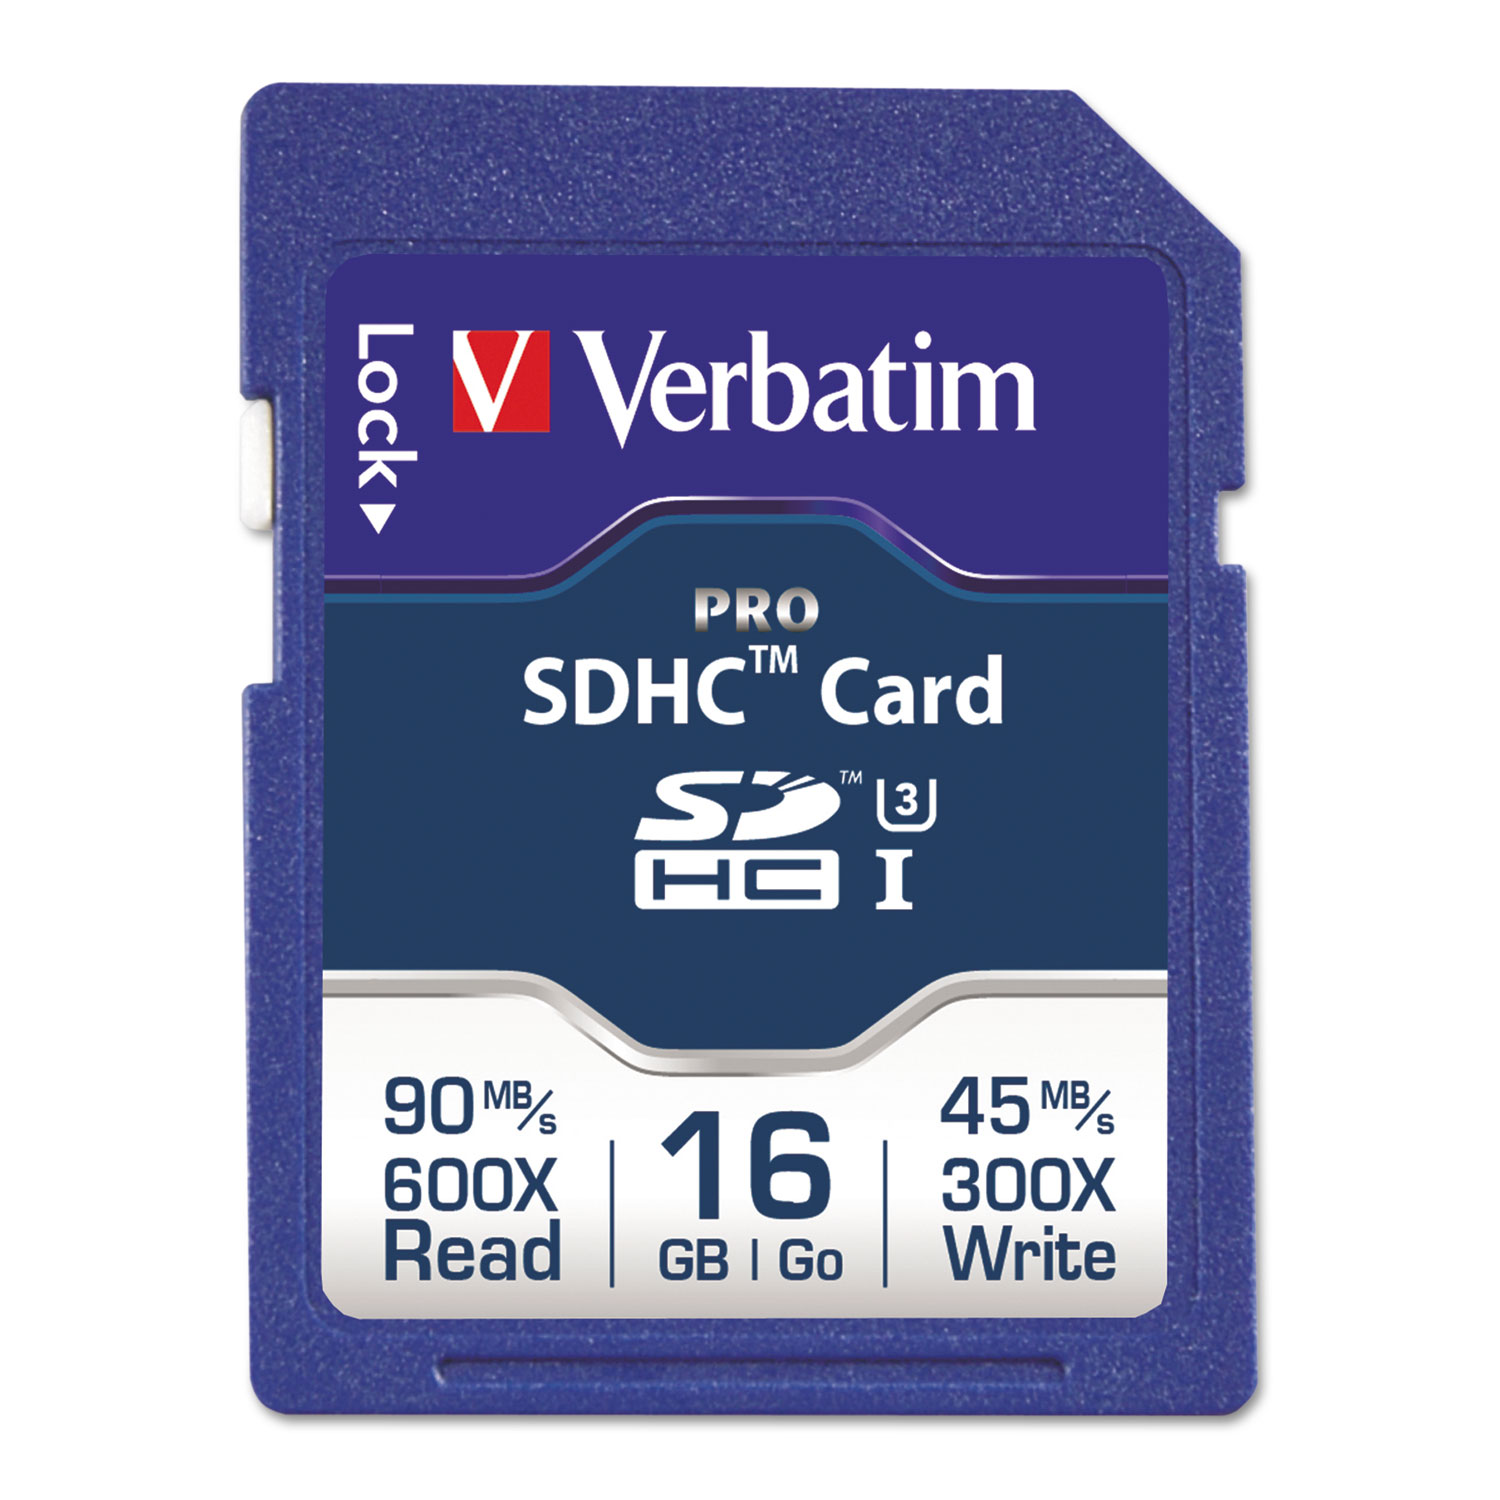 Pro 600X SDHC Memory Card, Class 10 UHS-1, 16GB